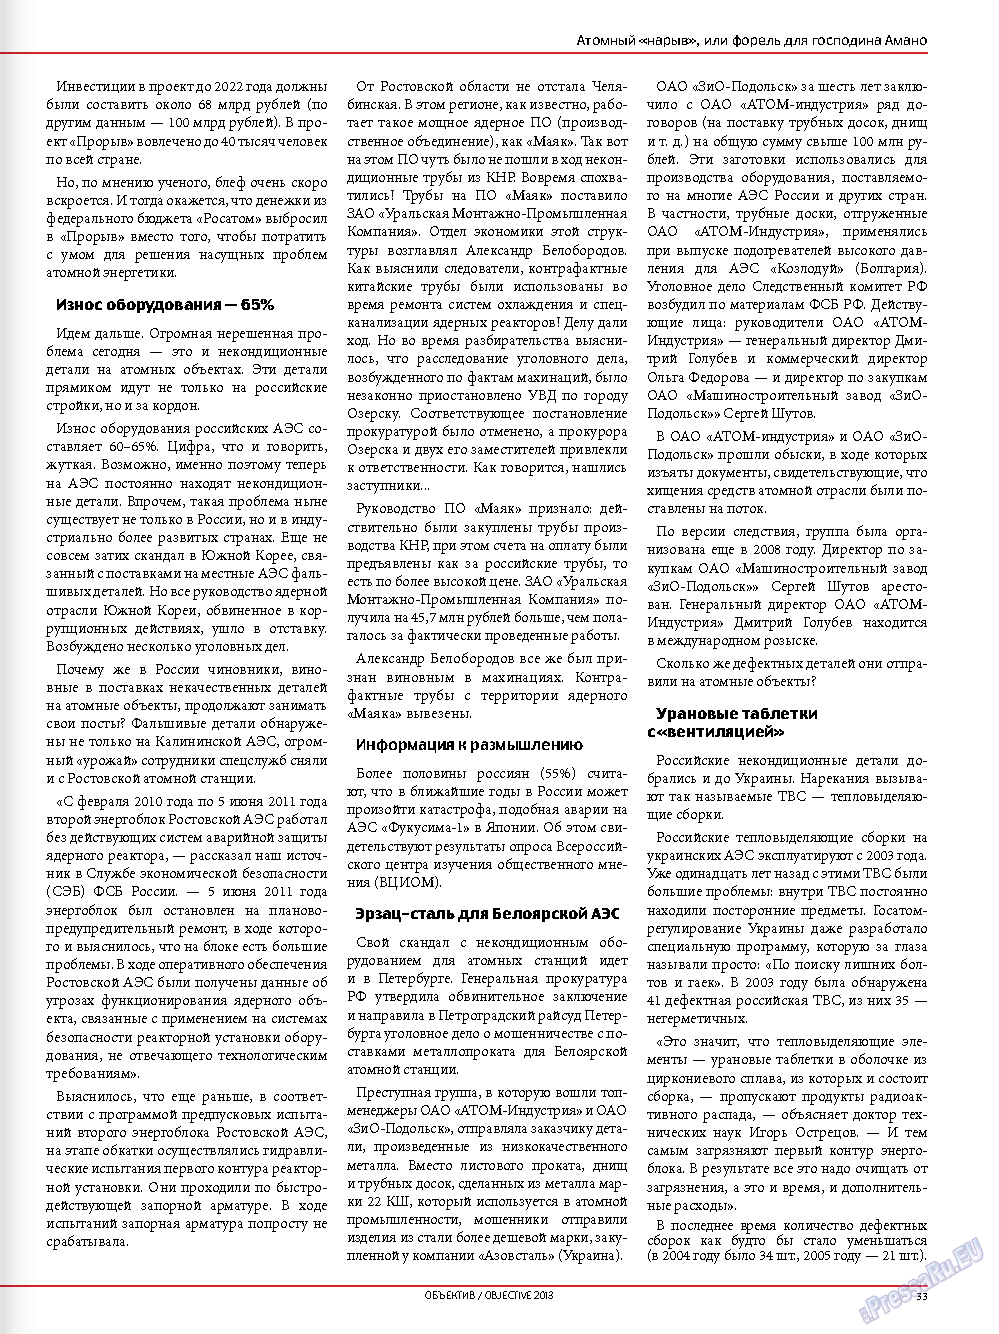 Объектив EU, журнал. 2013 №1 стр.33